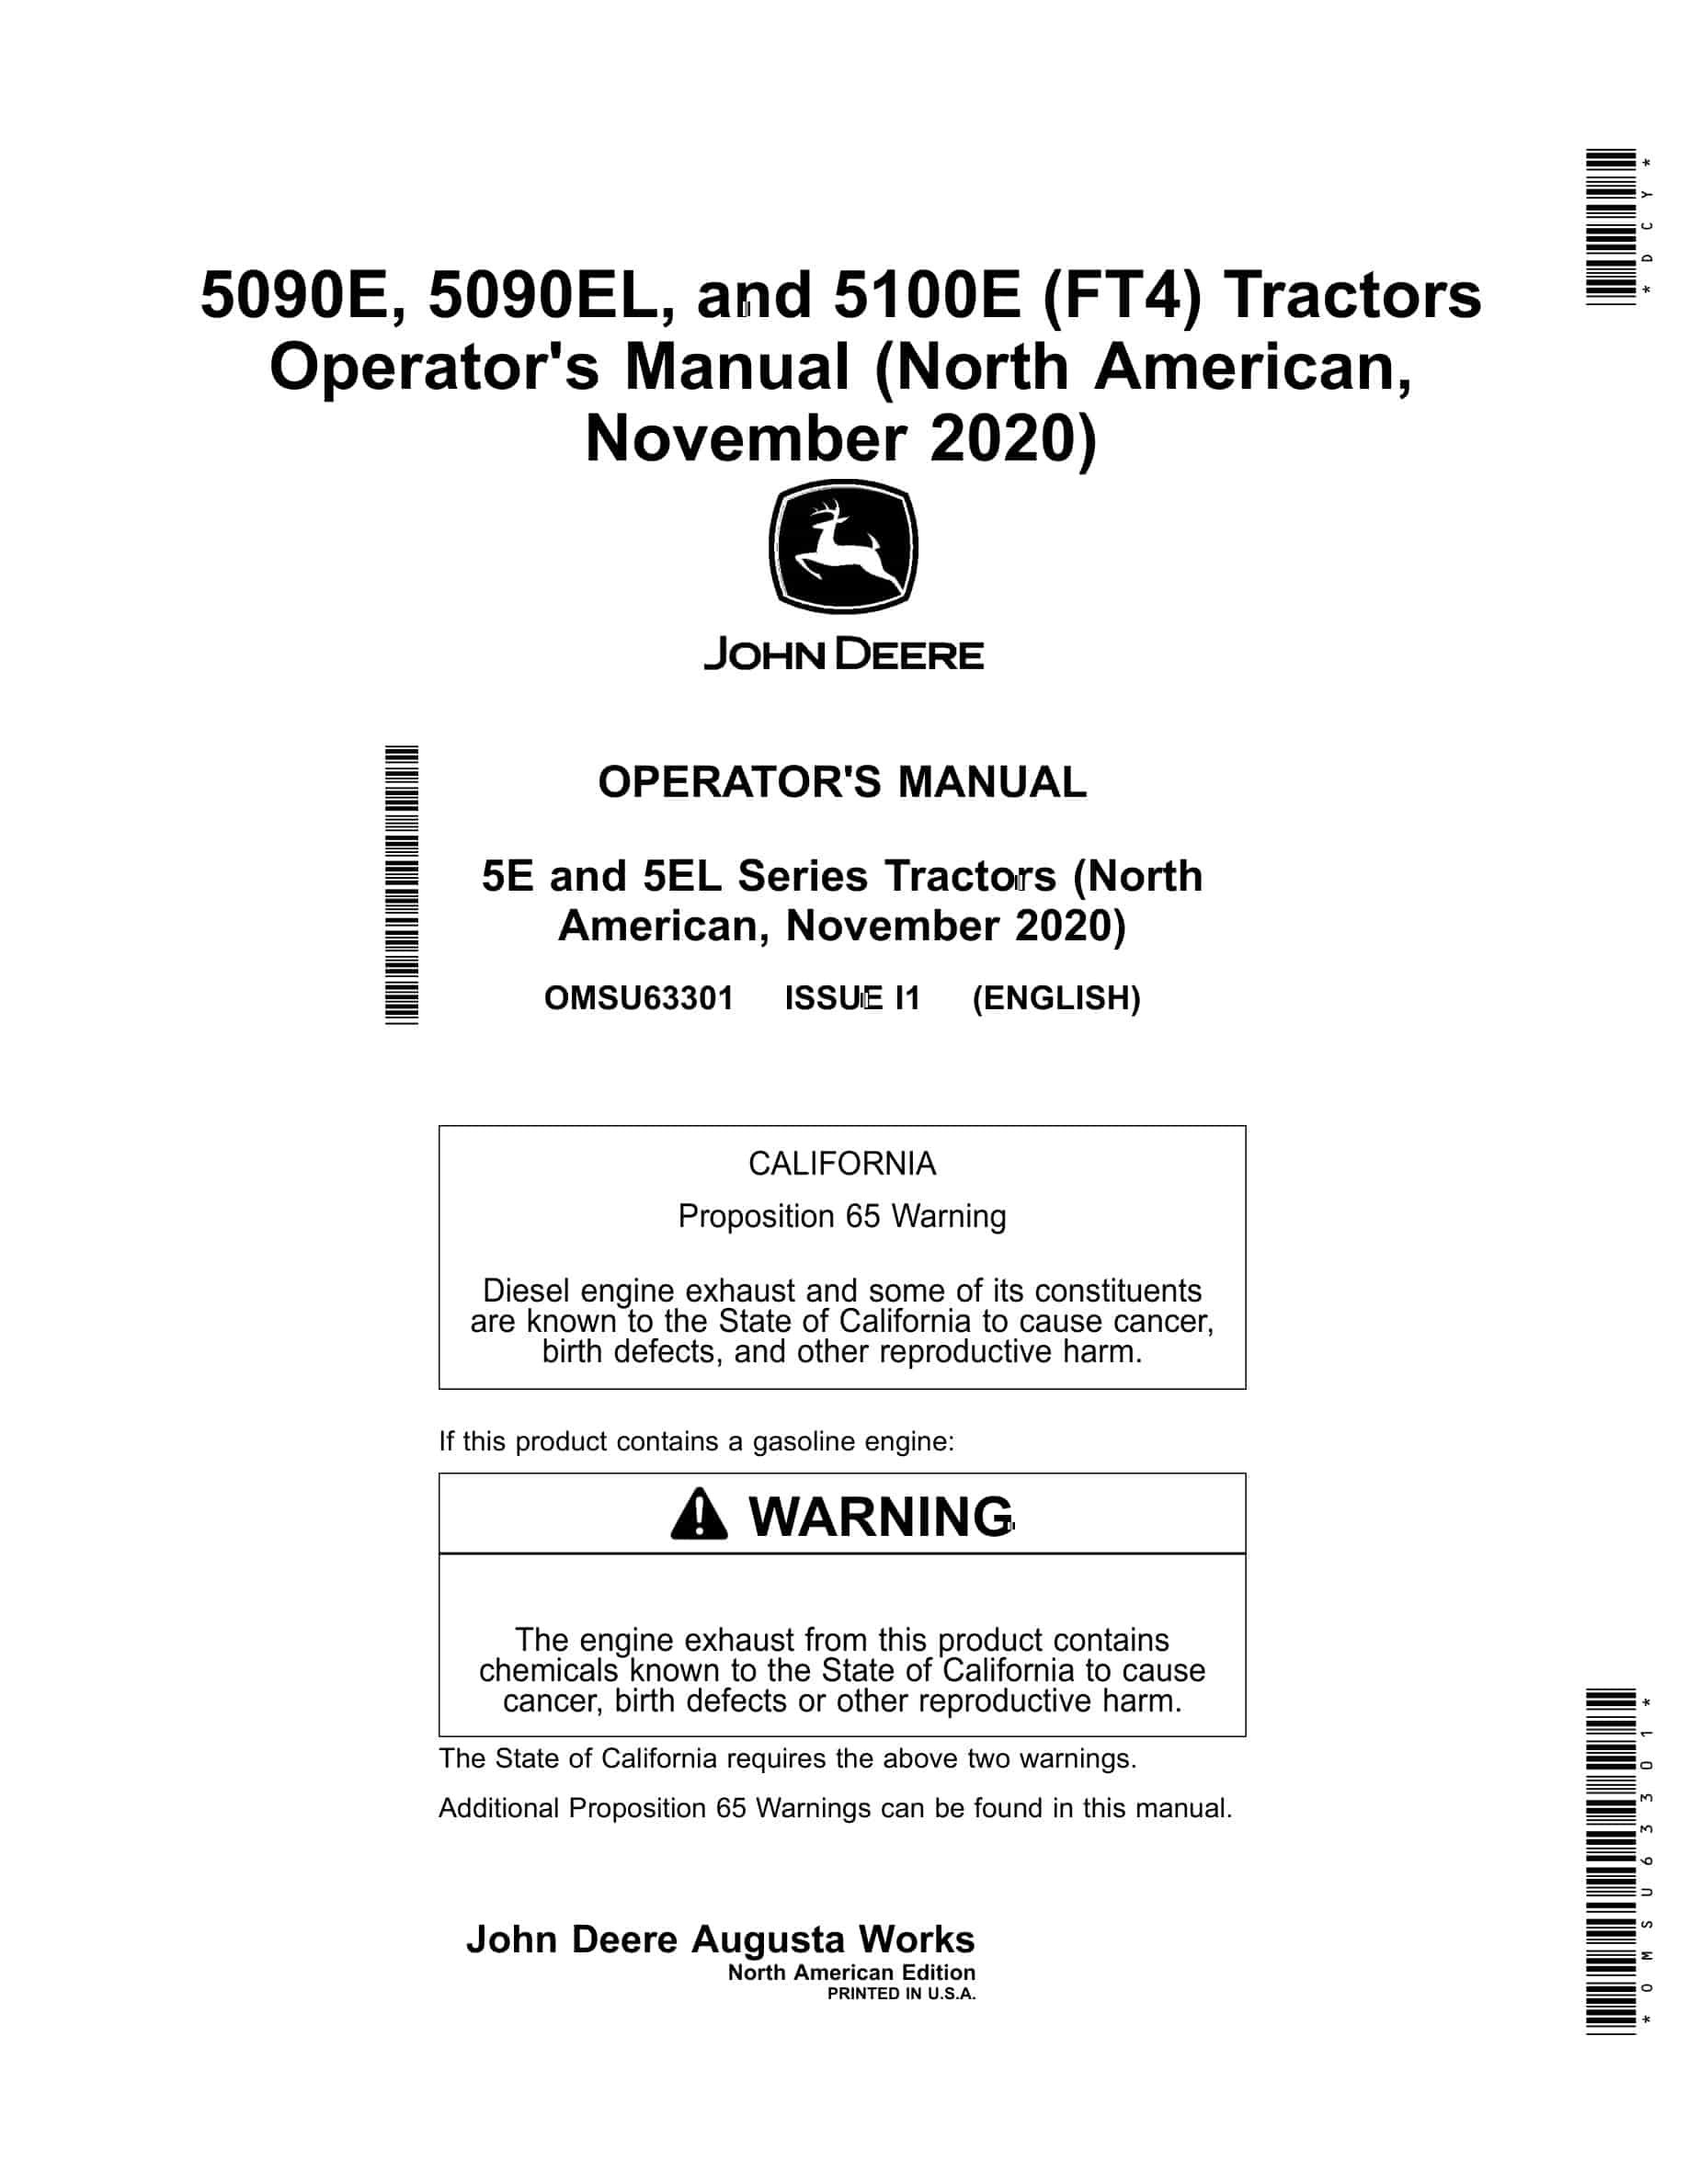 John Deere 5090E, 5090EL, and 5100E (FT4) Tractor Operator Manual OMSU63301-1